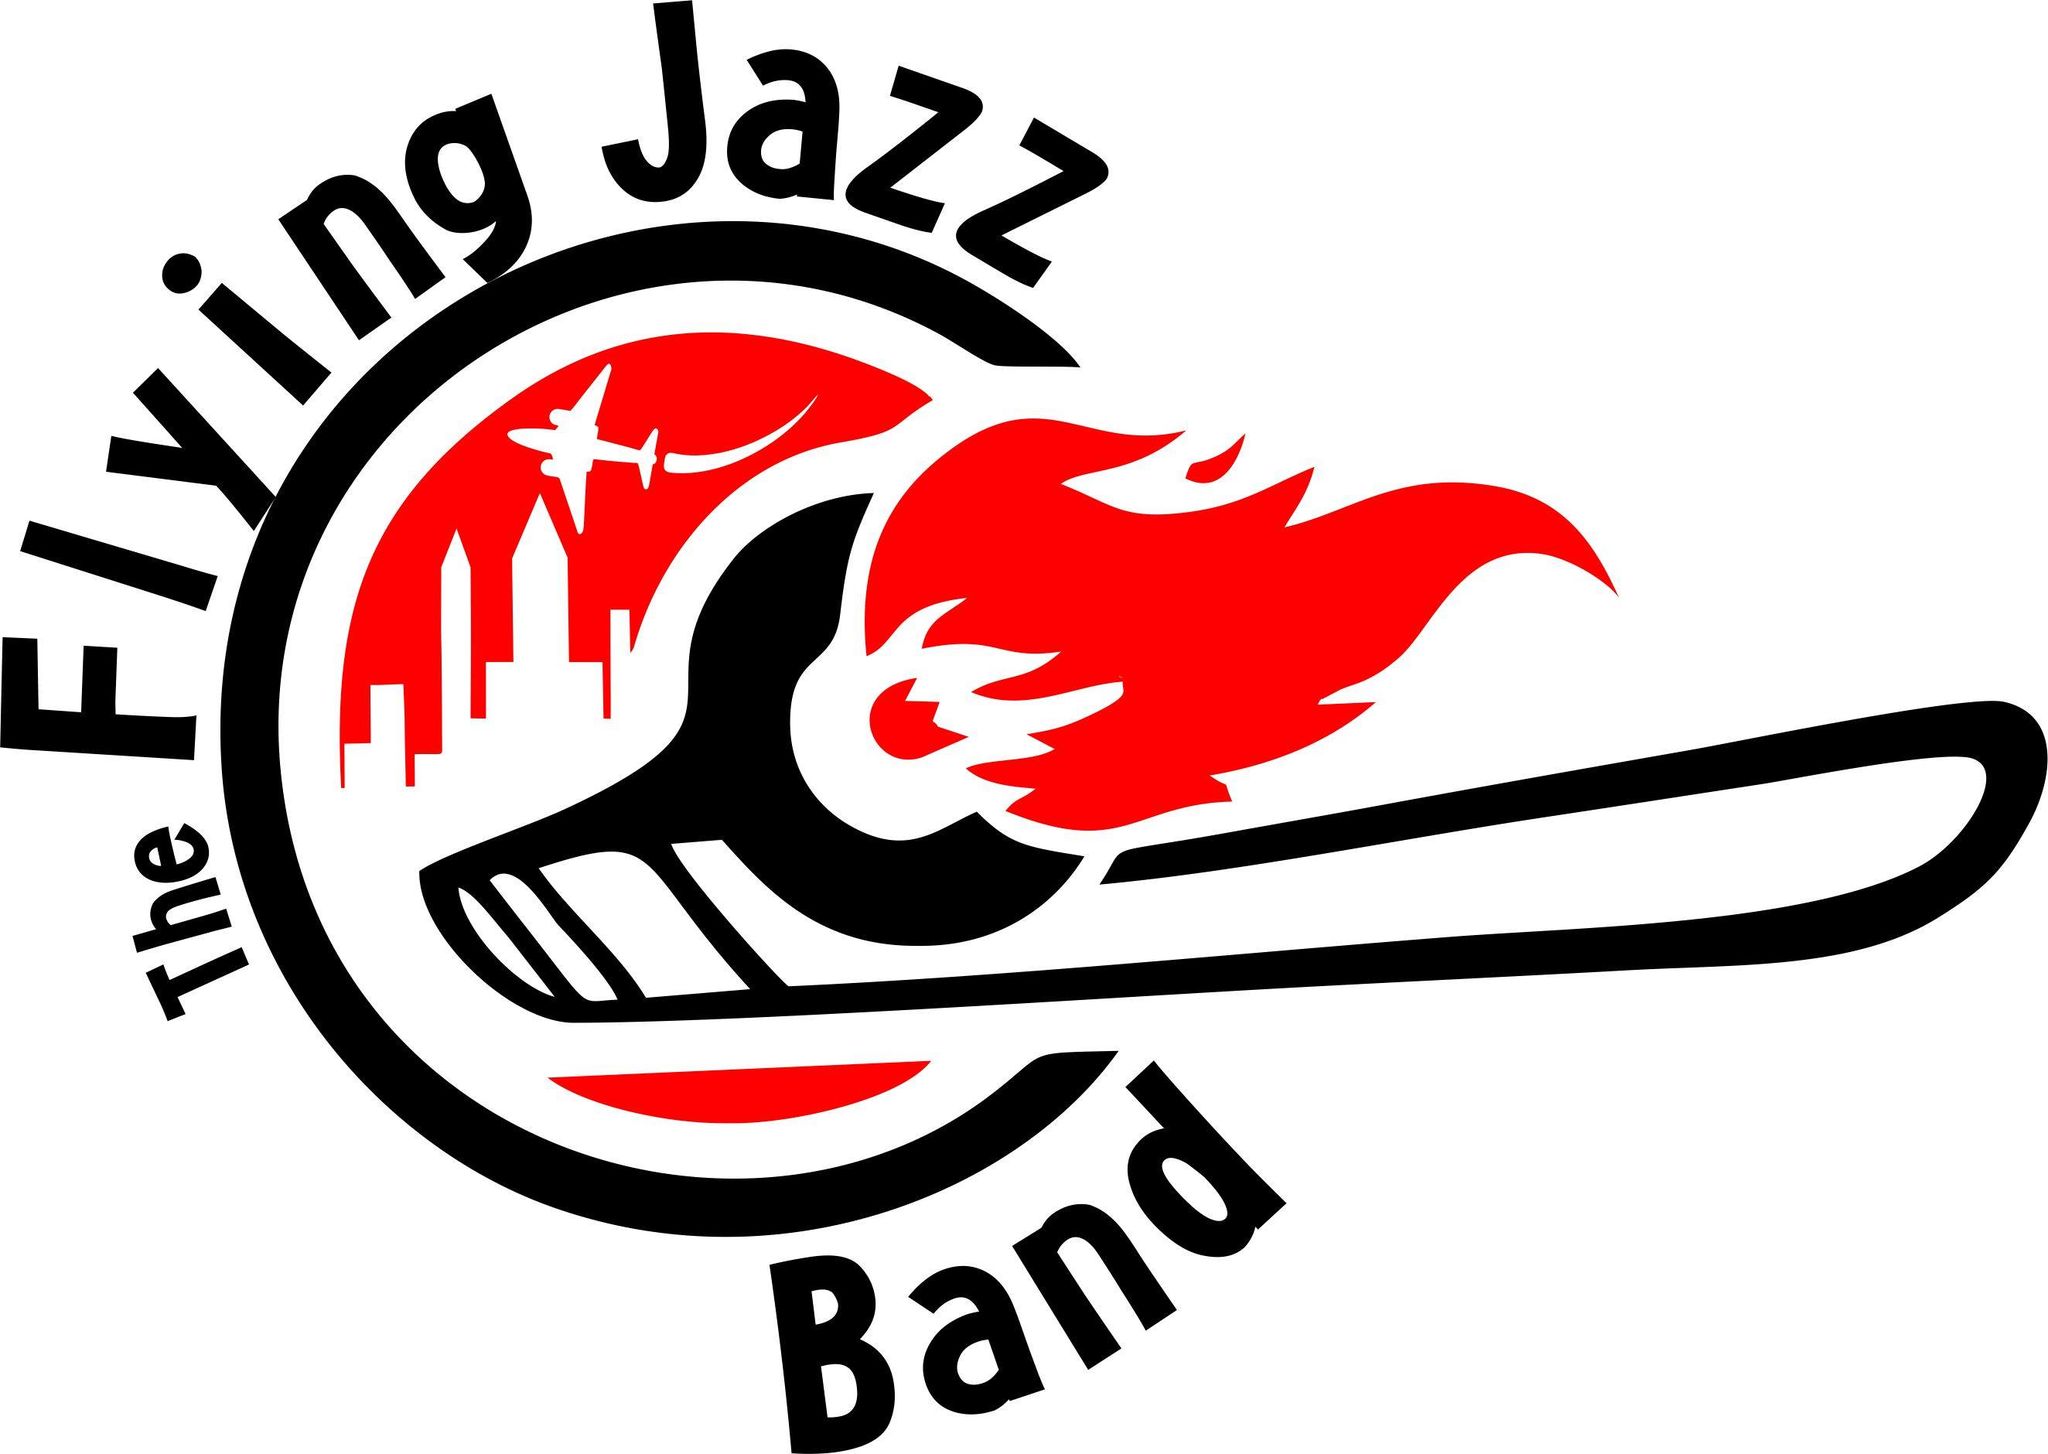 The Flying Jazz Band